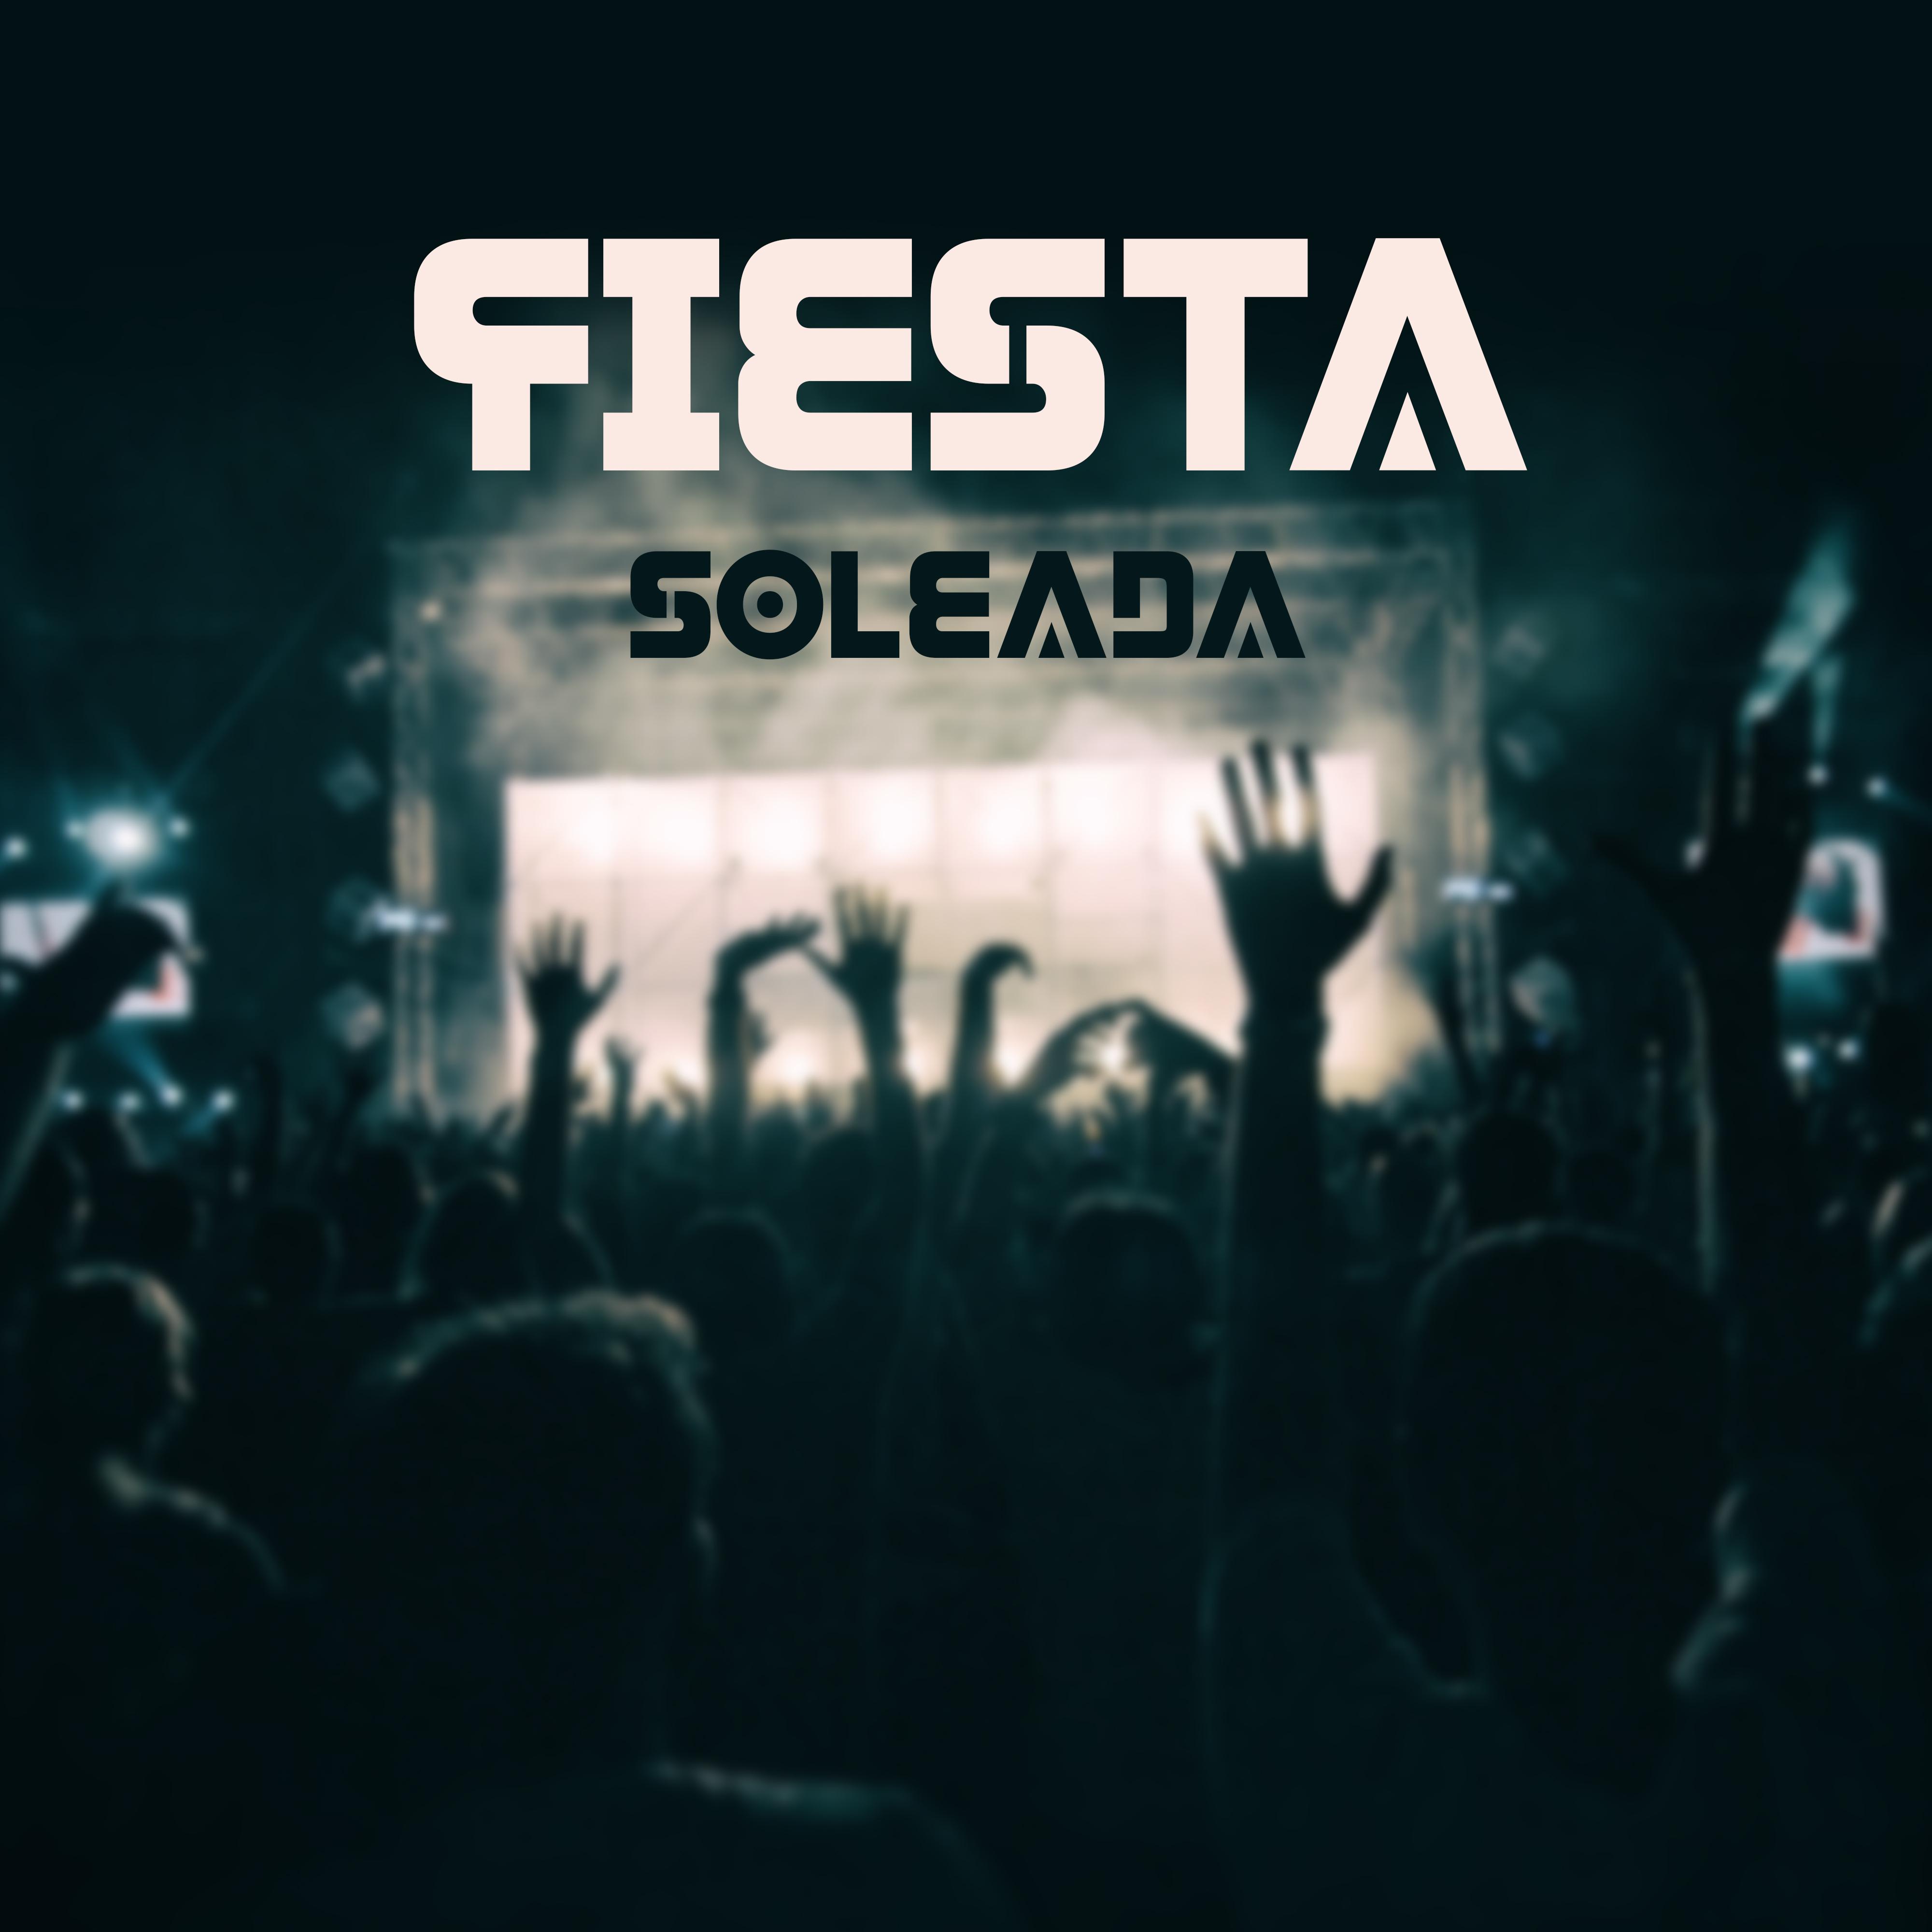 Fiesta Soleada